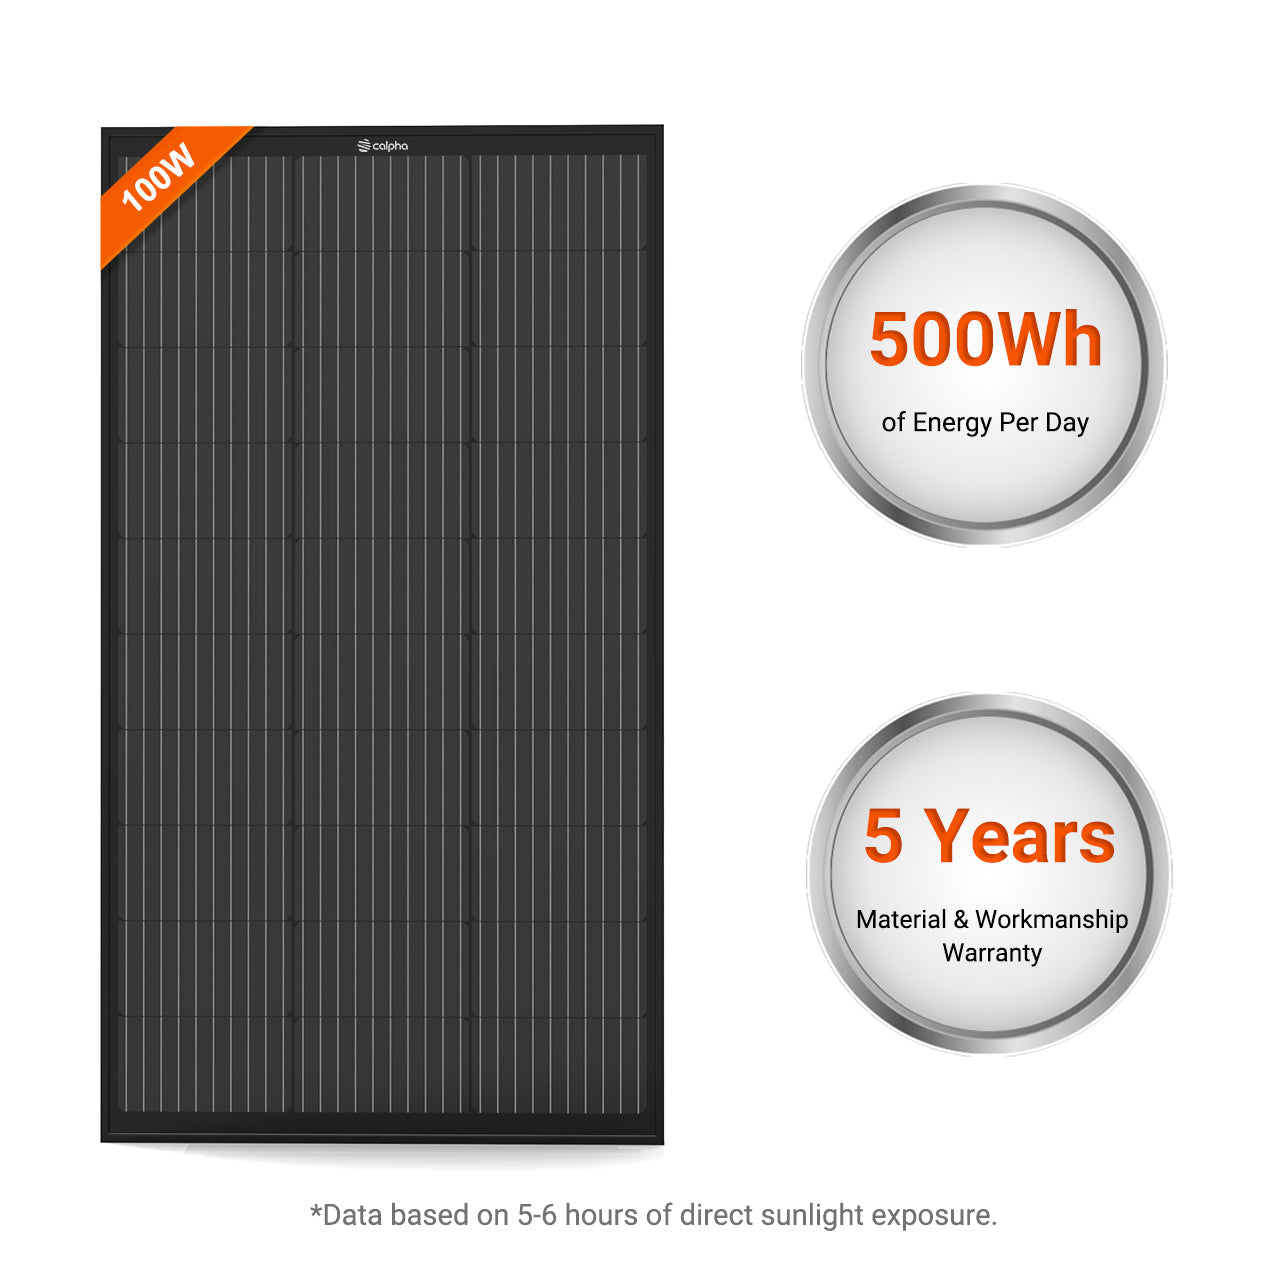 Calpha 100W 500Wh Monocrystalline Rigid Solar Panel for home - 5 Years Warranty